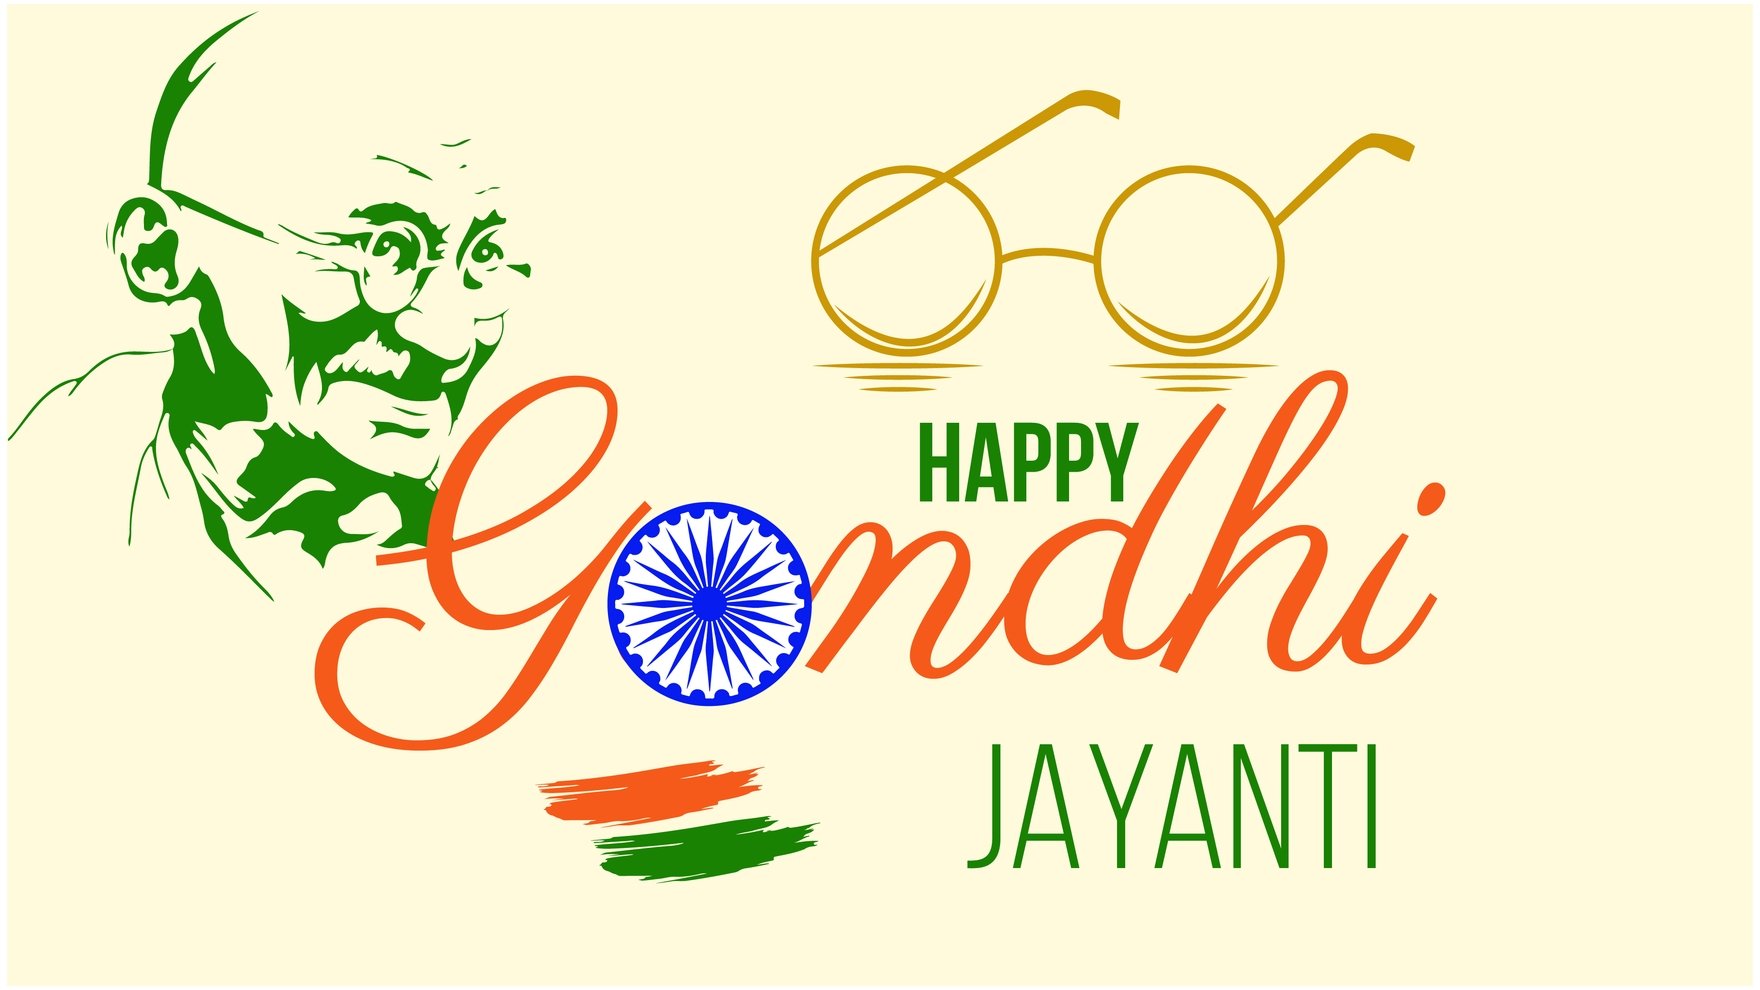 Free Happy Gandhi Jayanti Background